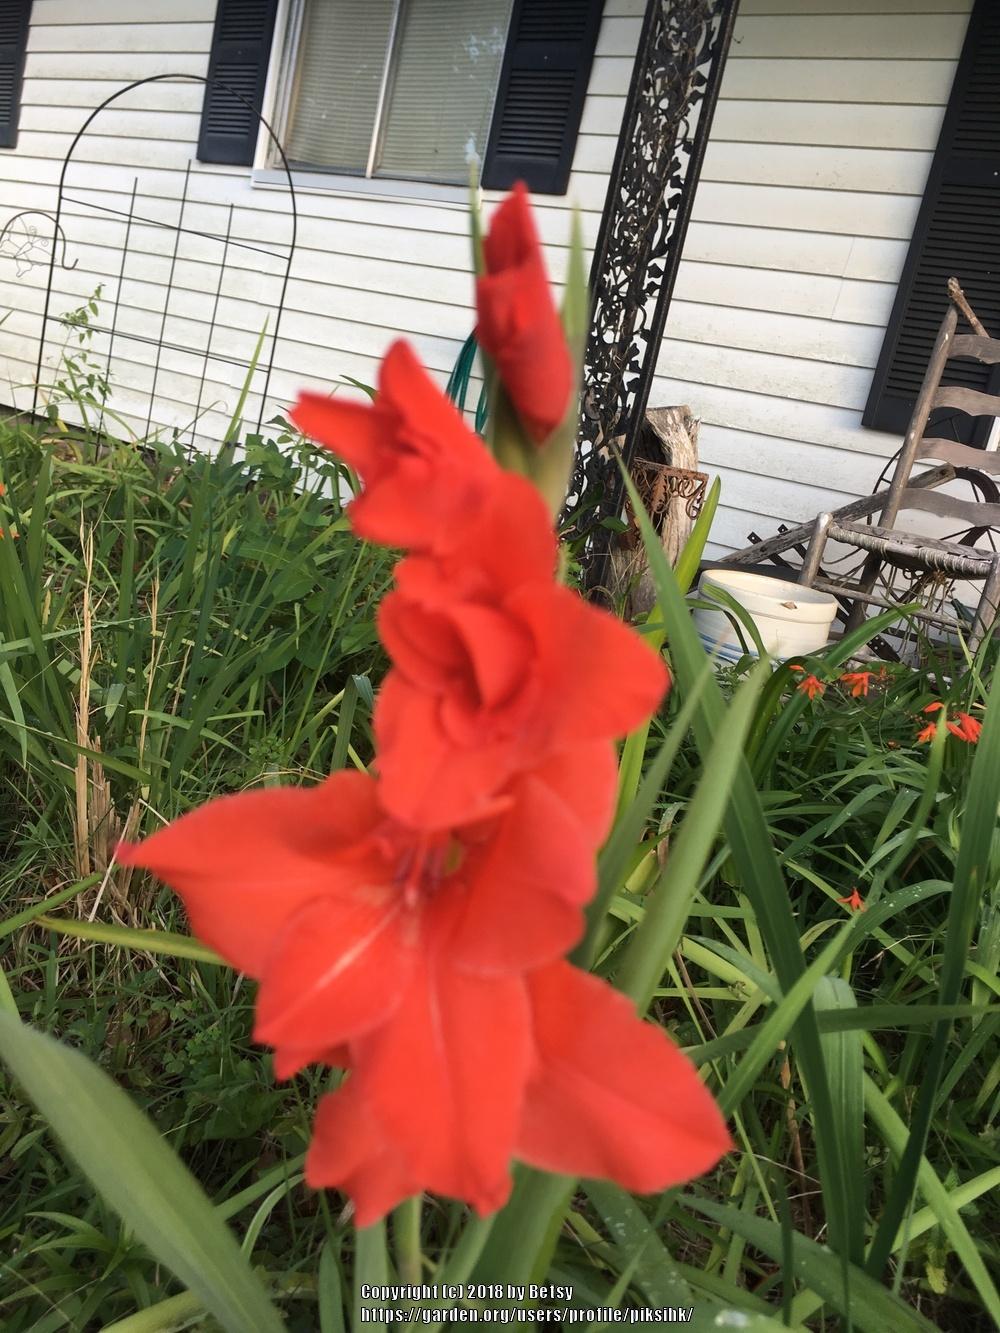 Photo of Gladiola (Gladiolus) uploaded by piksihk